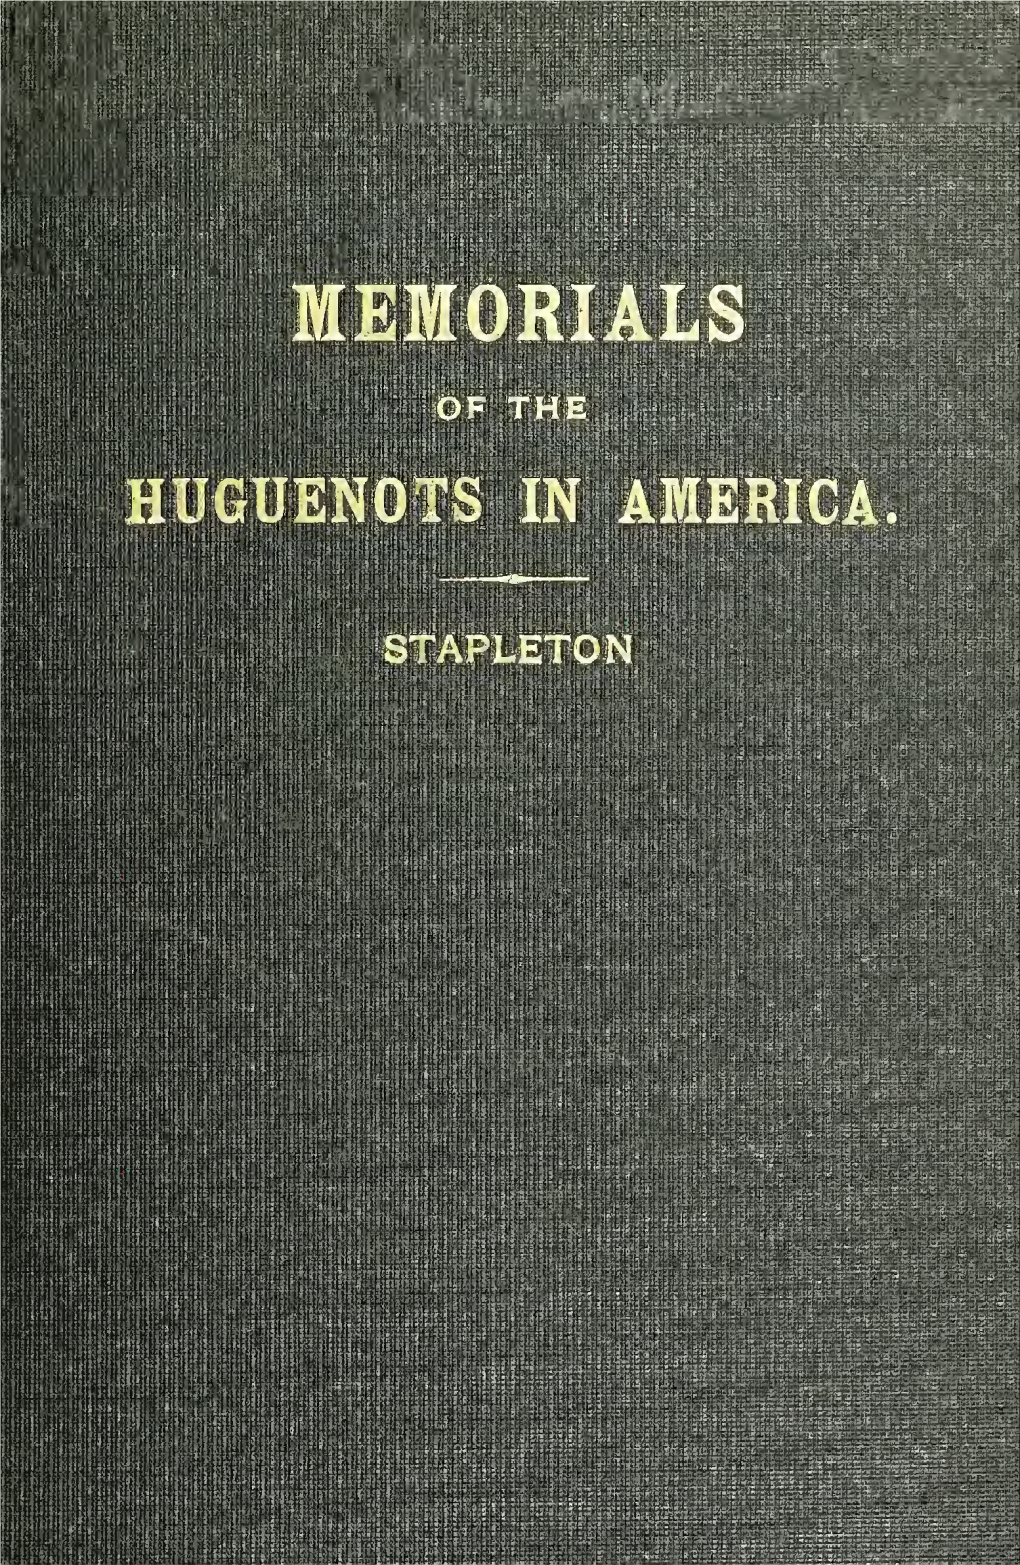 Memorials of the Huguenots in America